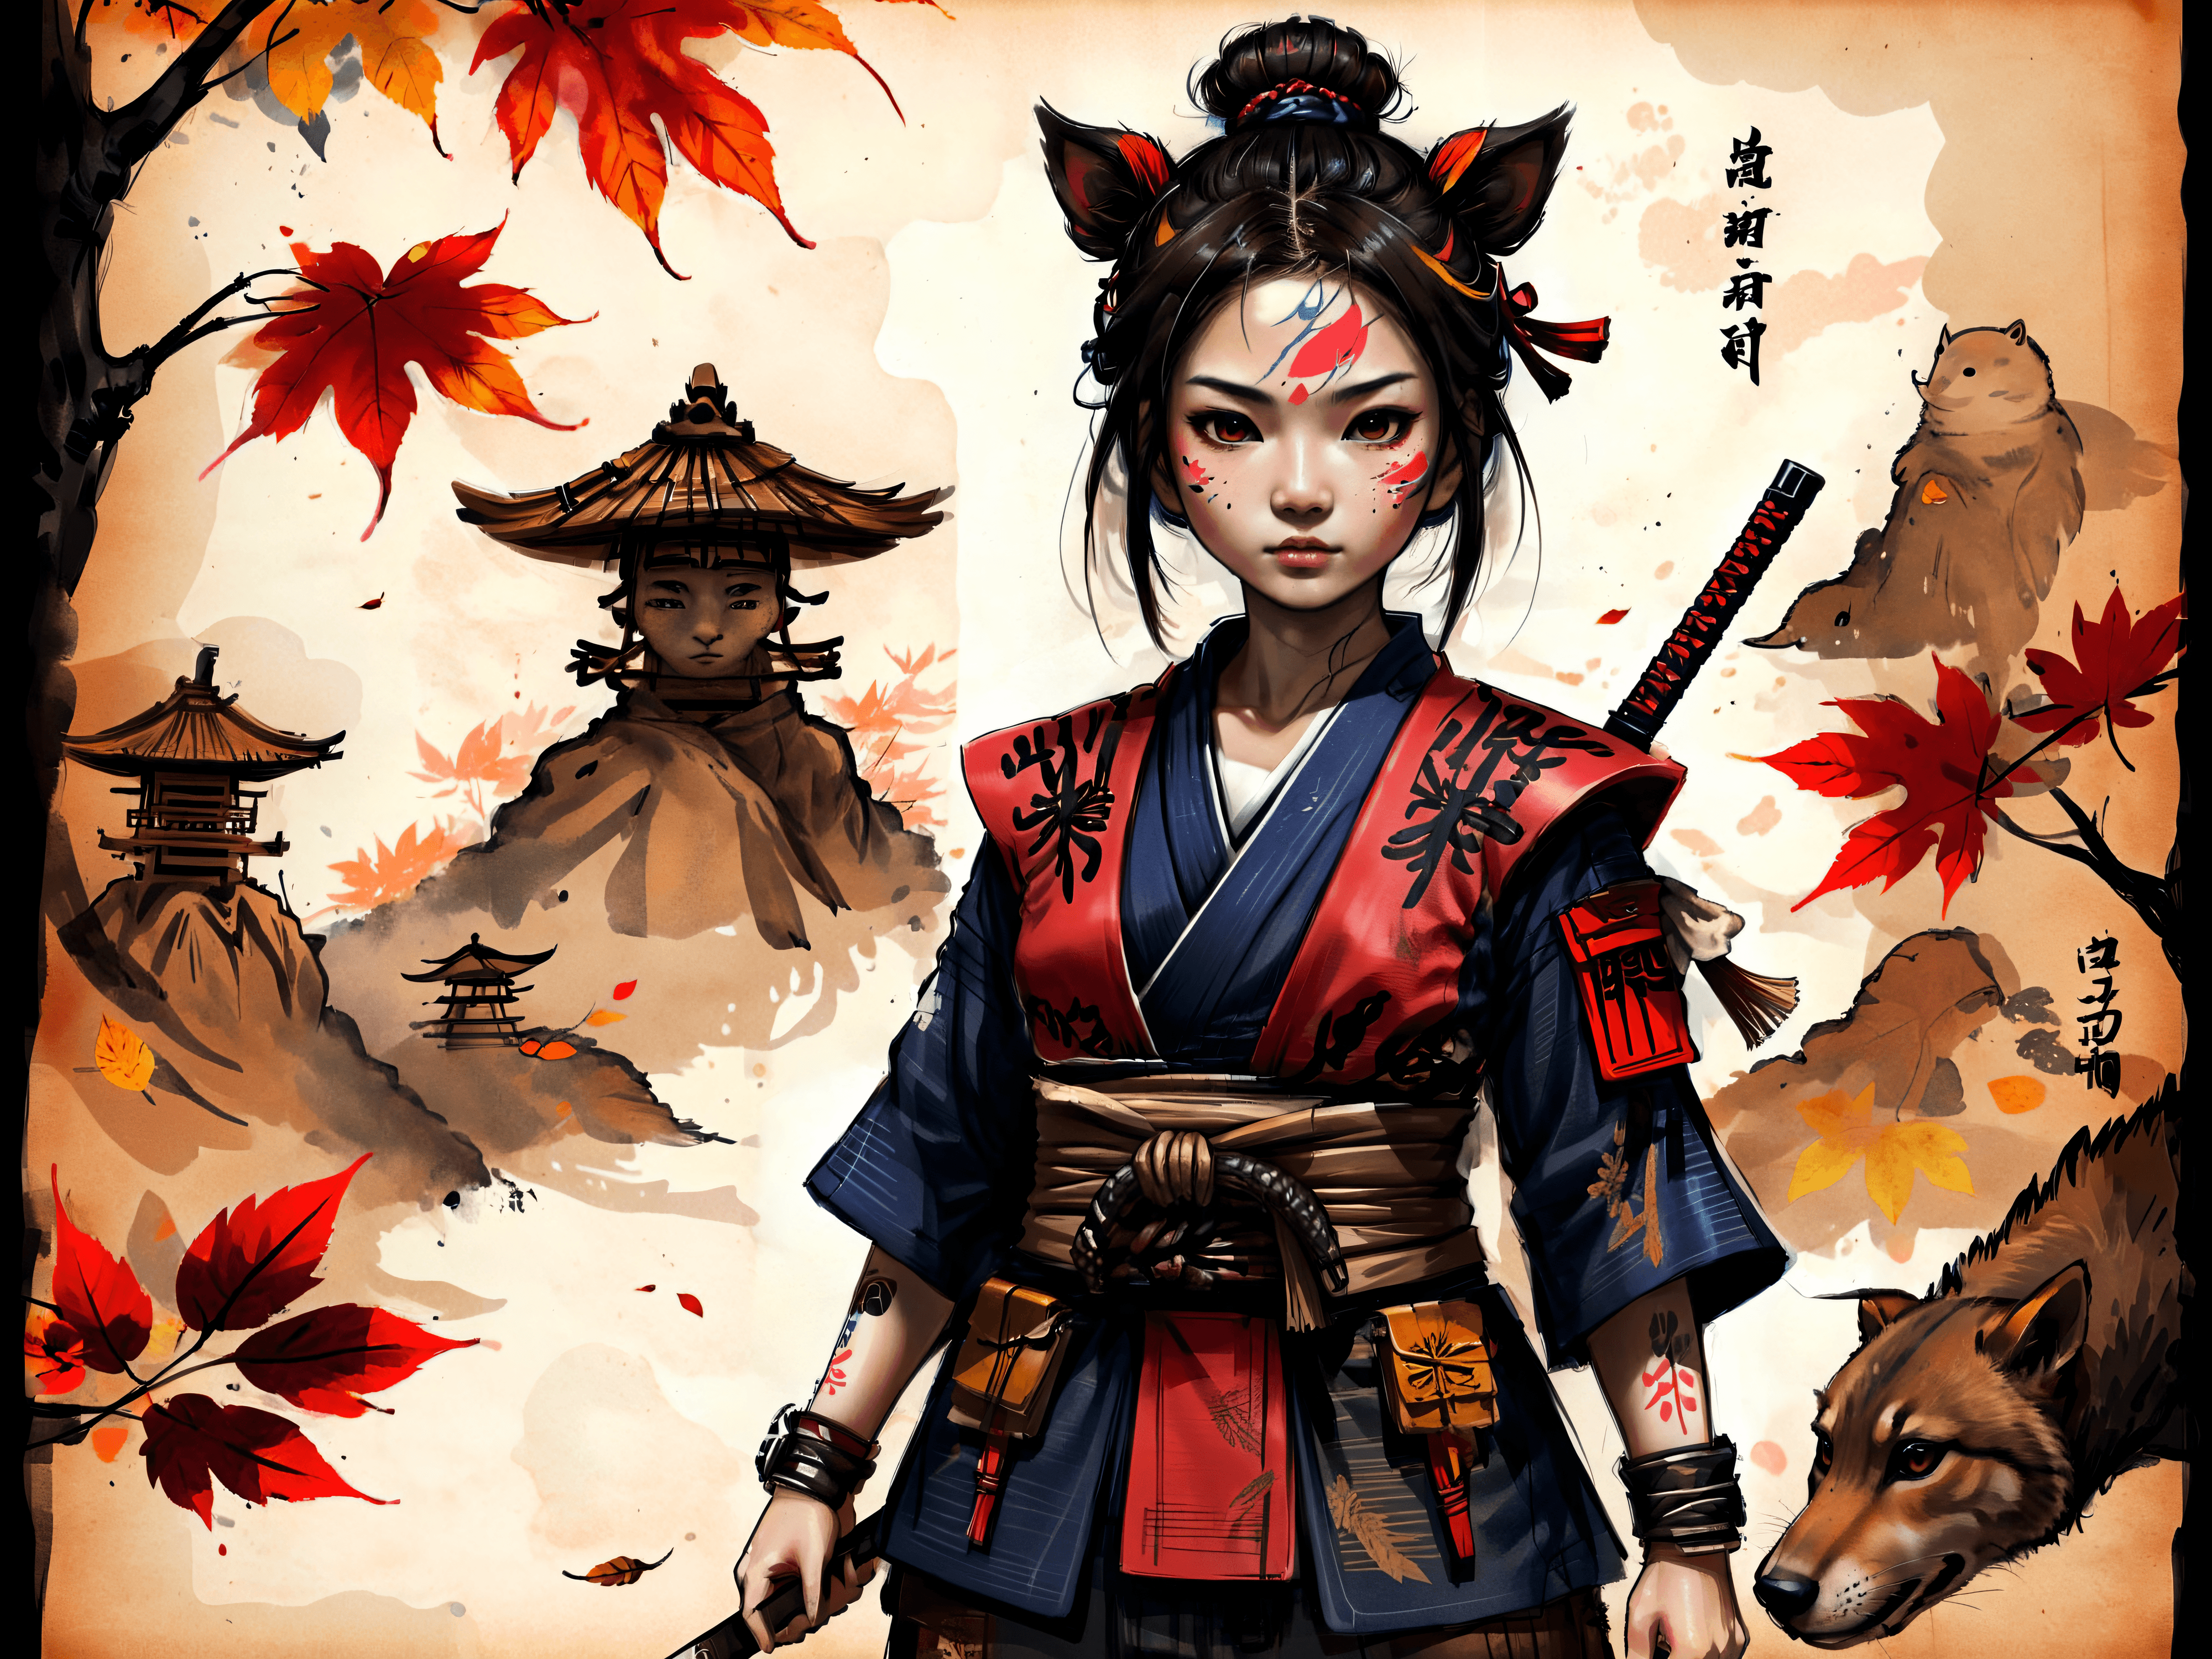 Young Samurai Lady